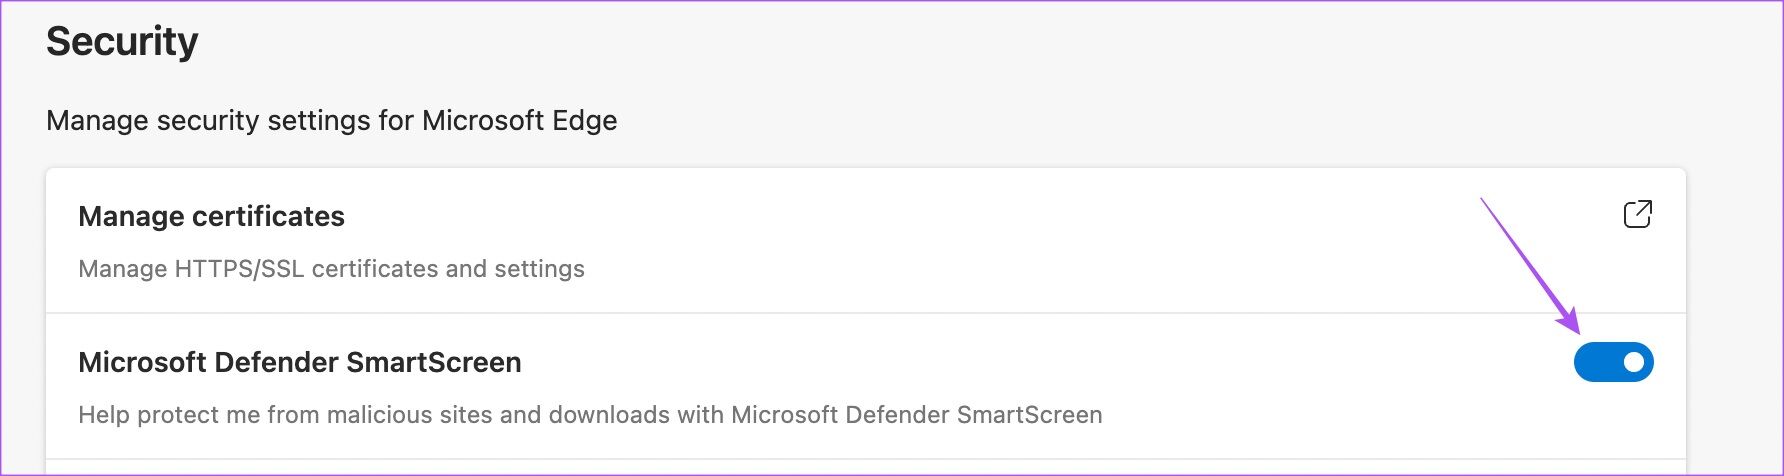 disable microsofشبشبشبشt defender smartscreen microsft edge 1784x476 - أفضل 7 إصلاحات لاستخدام وحدة المعالجة المركزية بنسبة 100٪ في Microsoft Edge على Mac